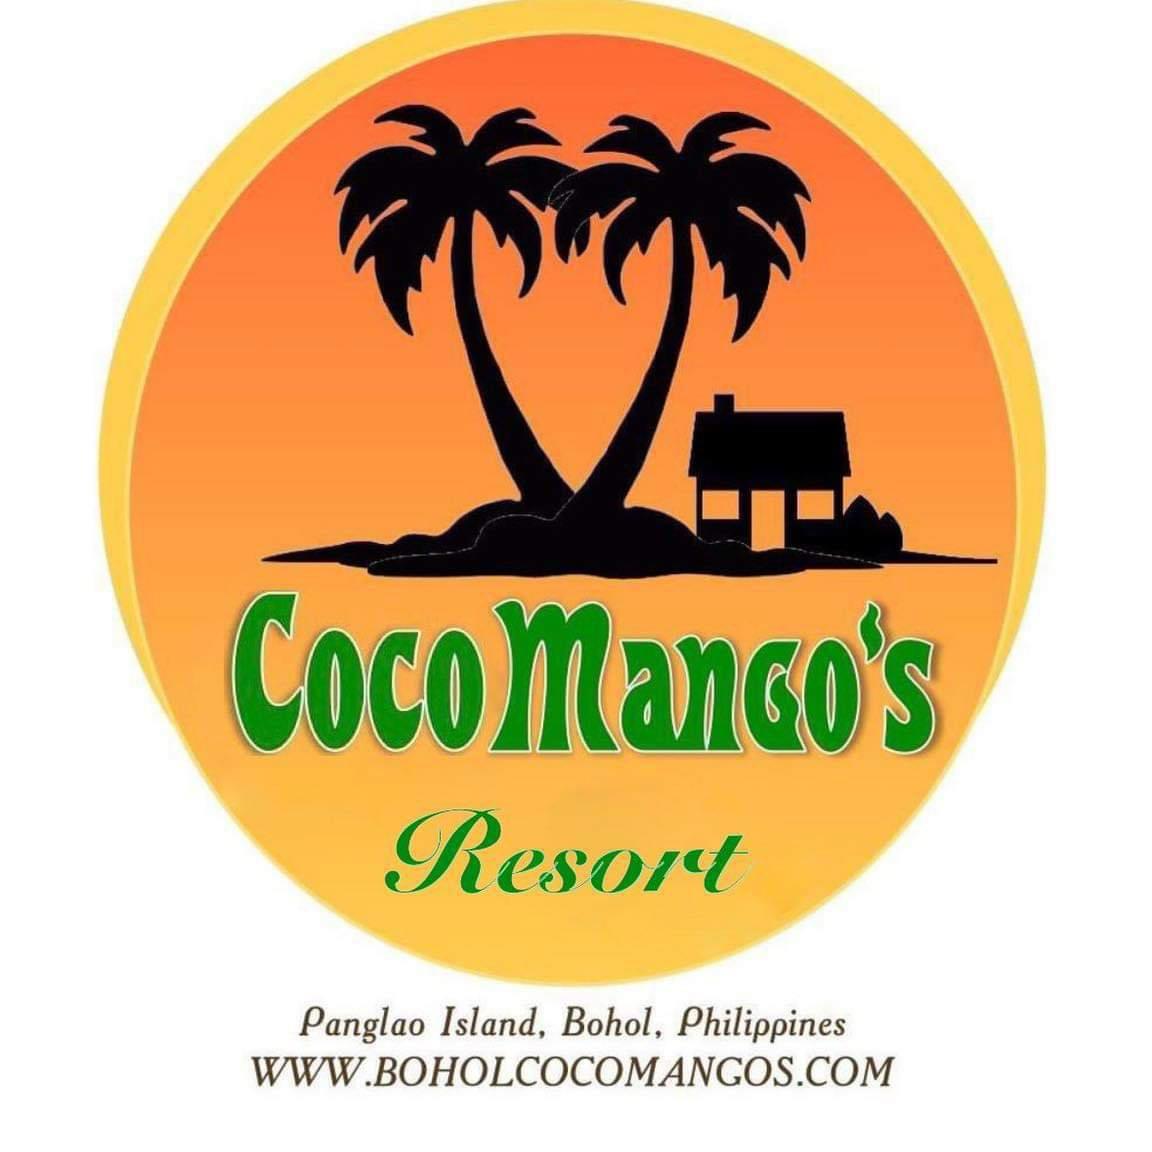 Coco mangos resort logo